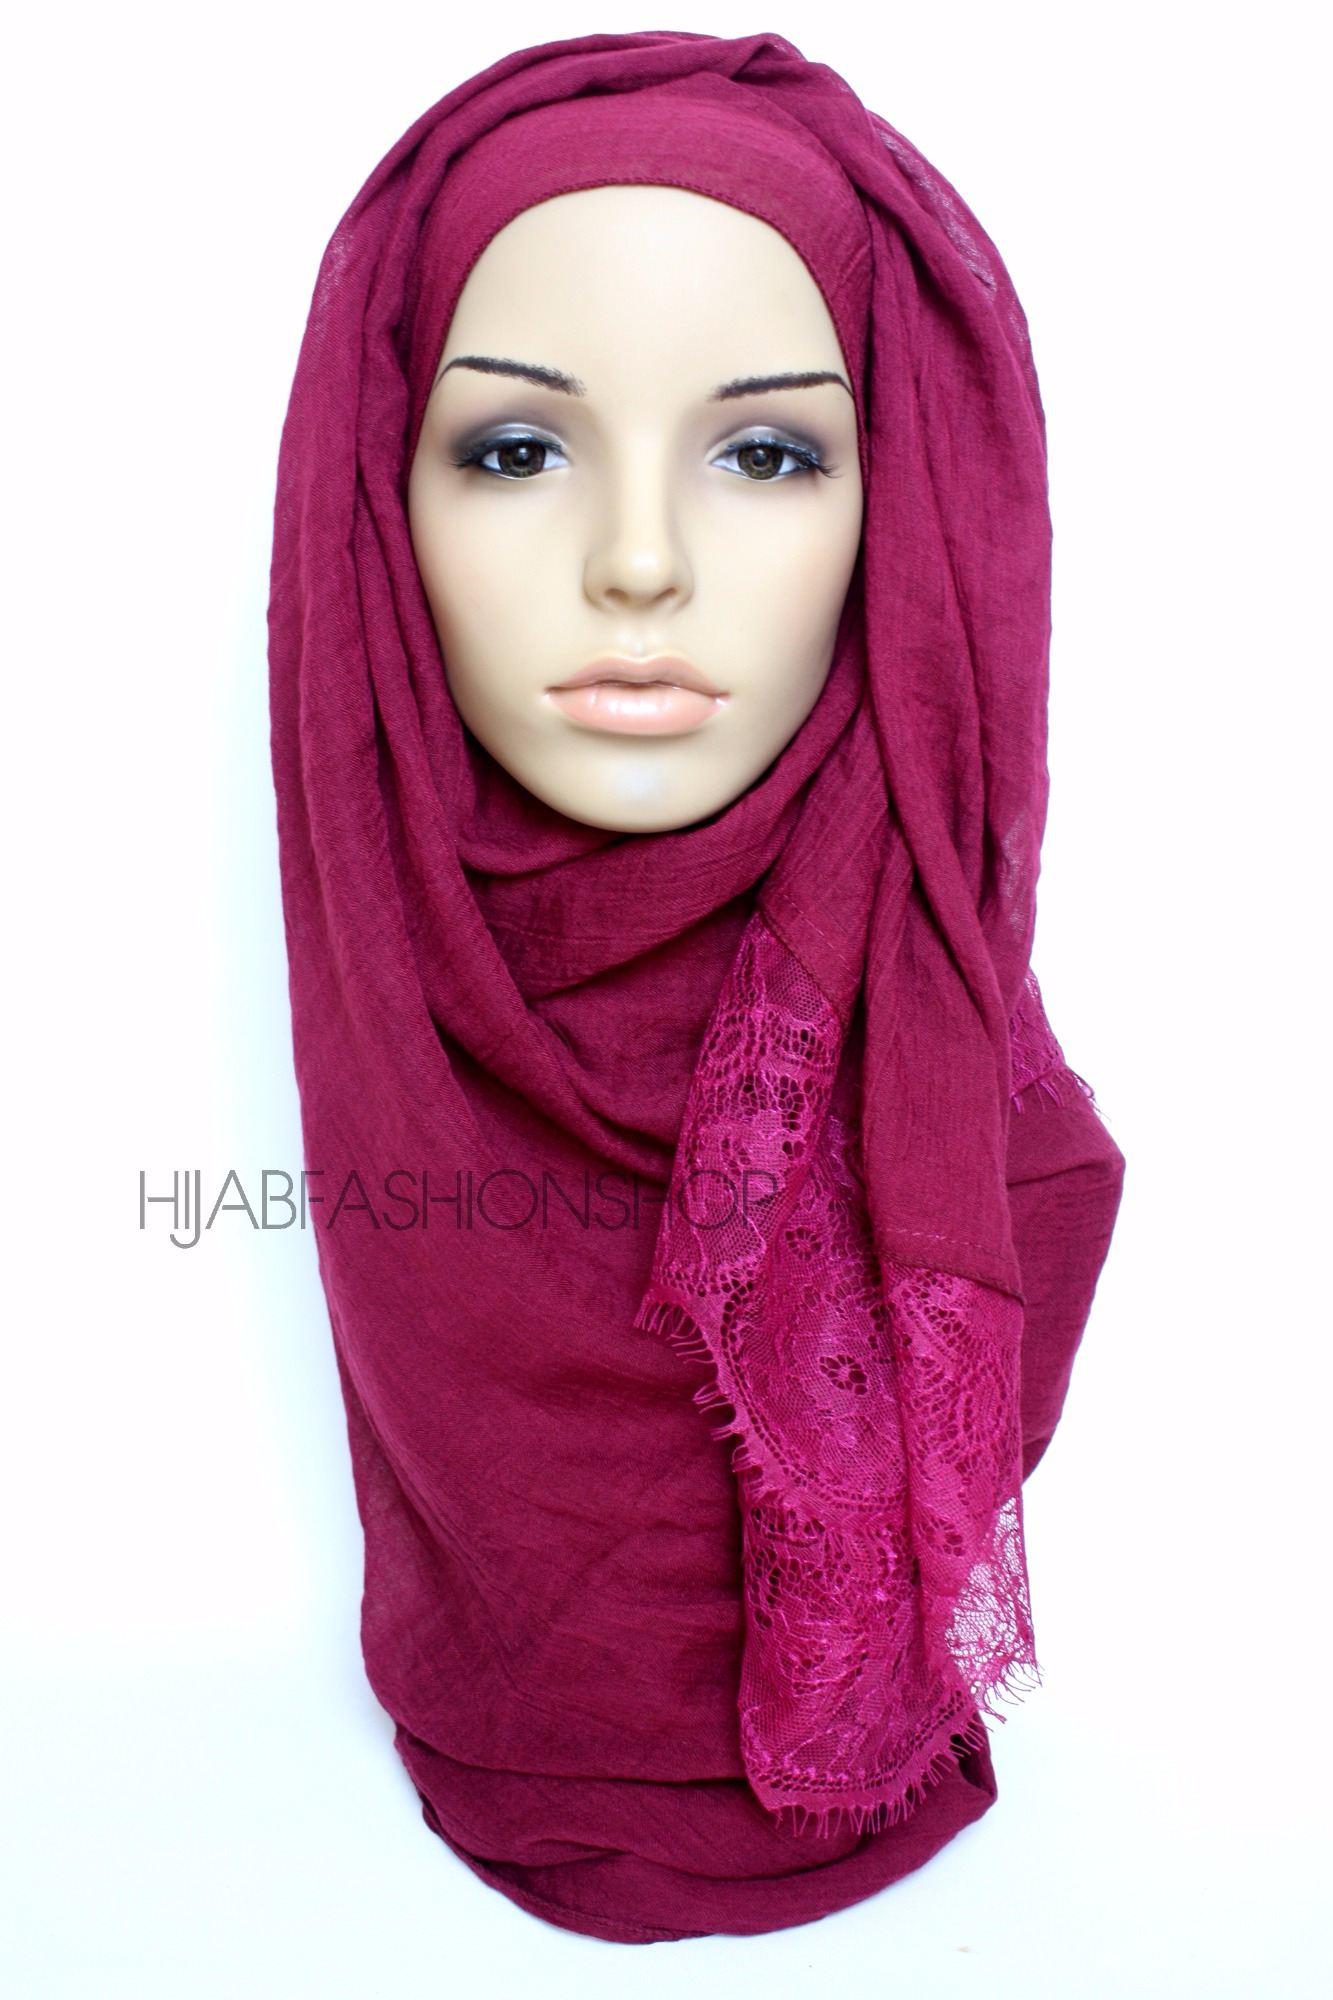 raspberry purple plain hijab with lace edges